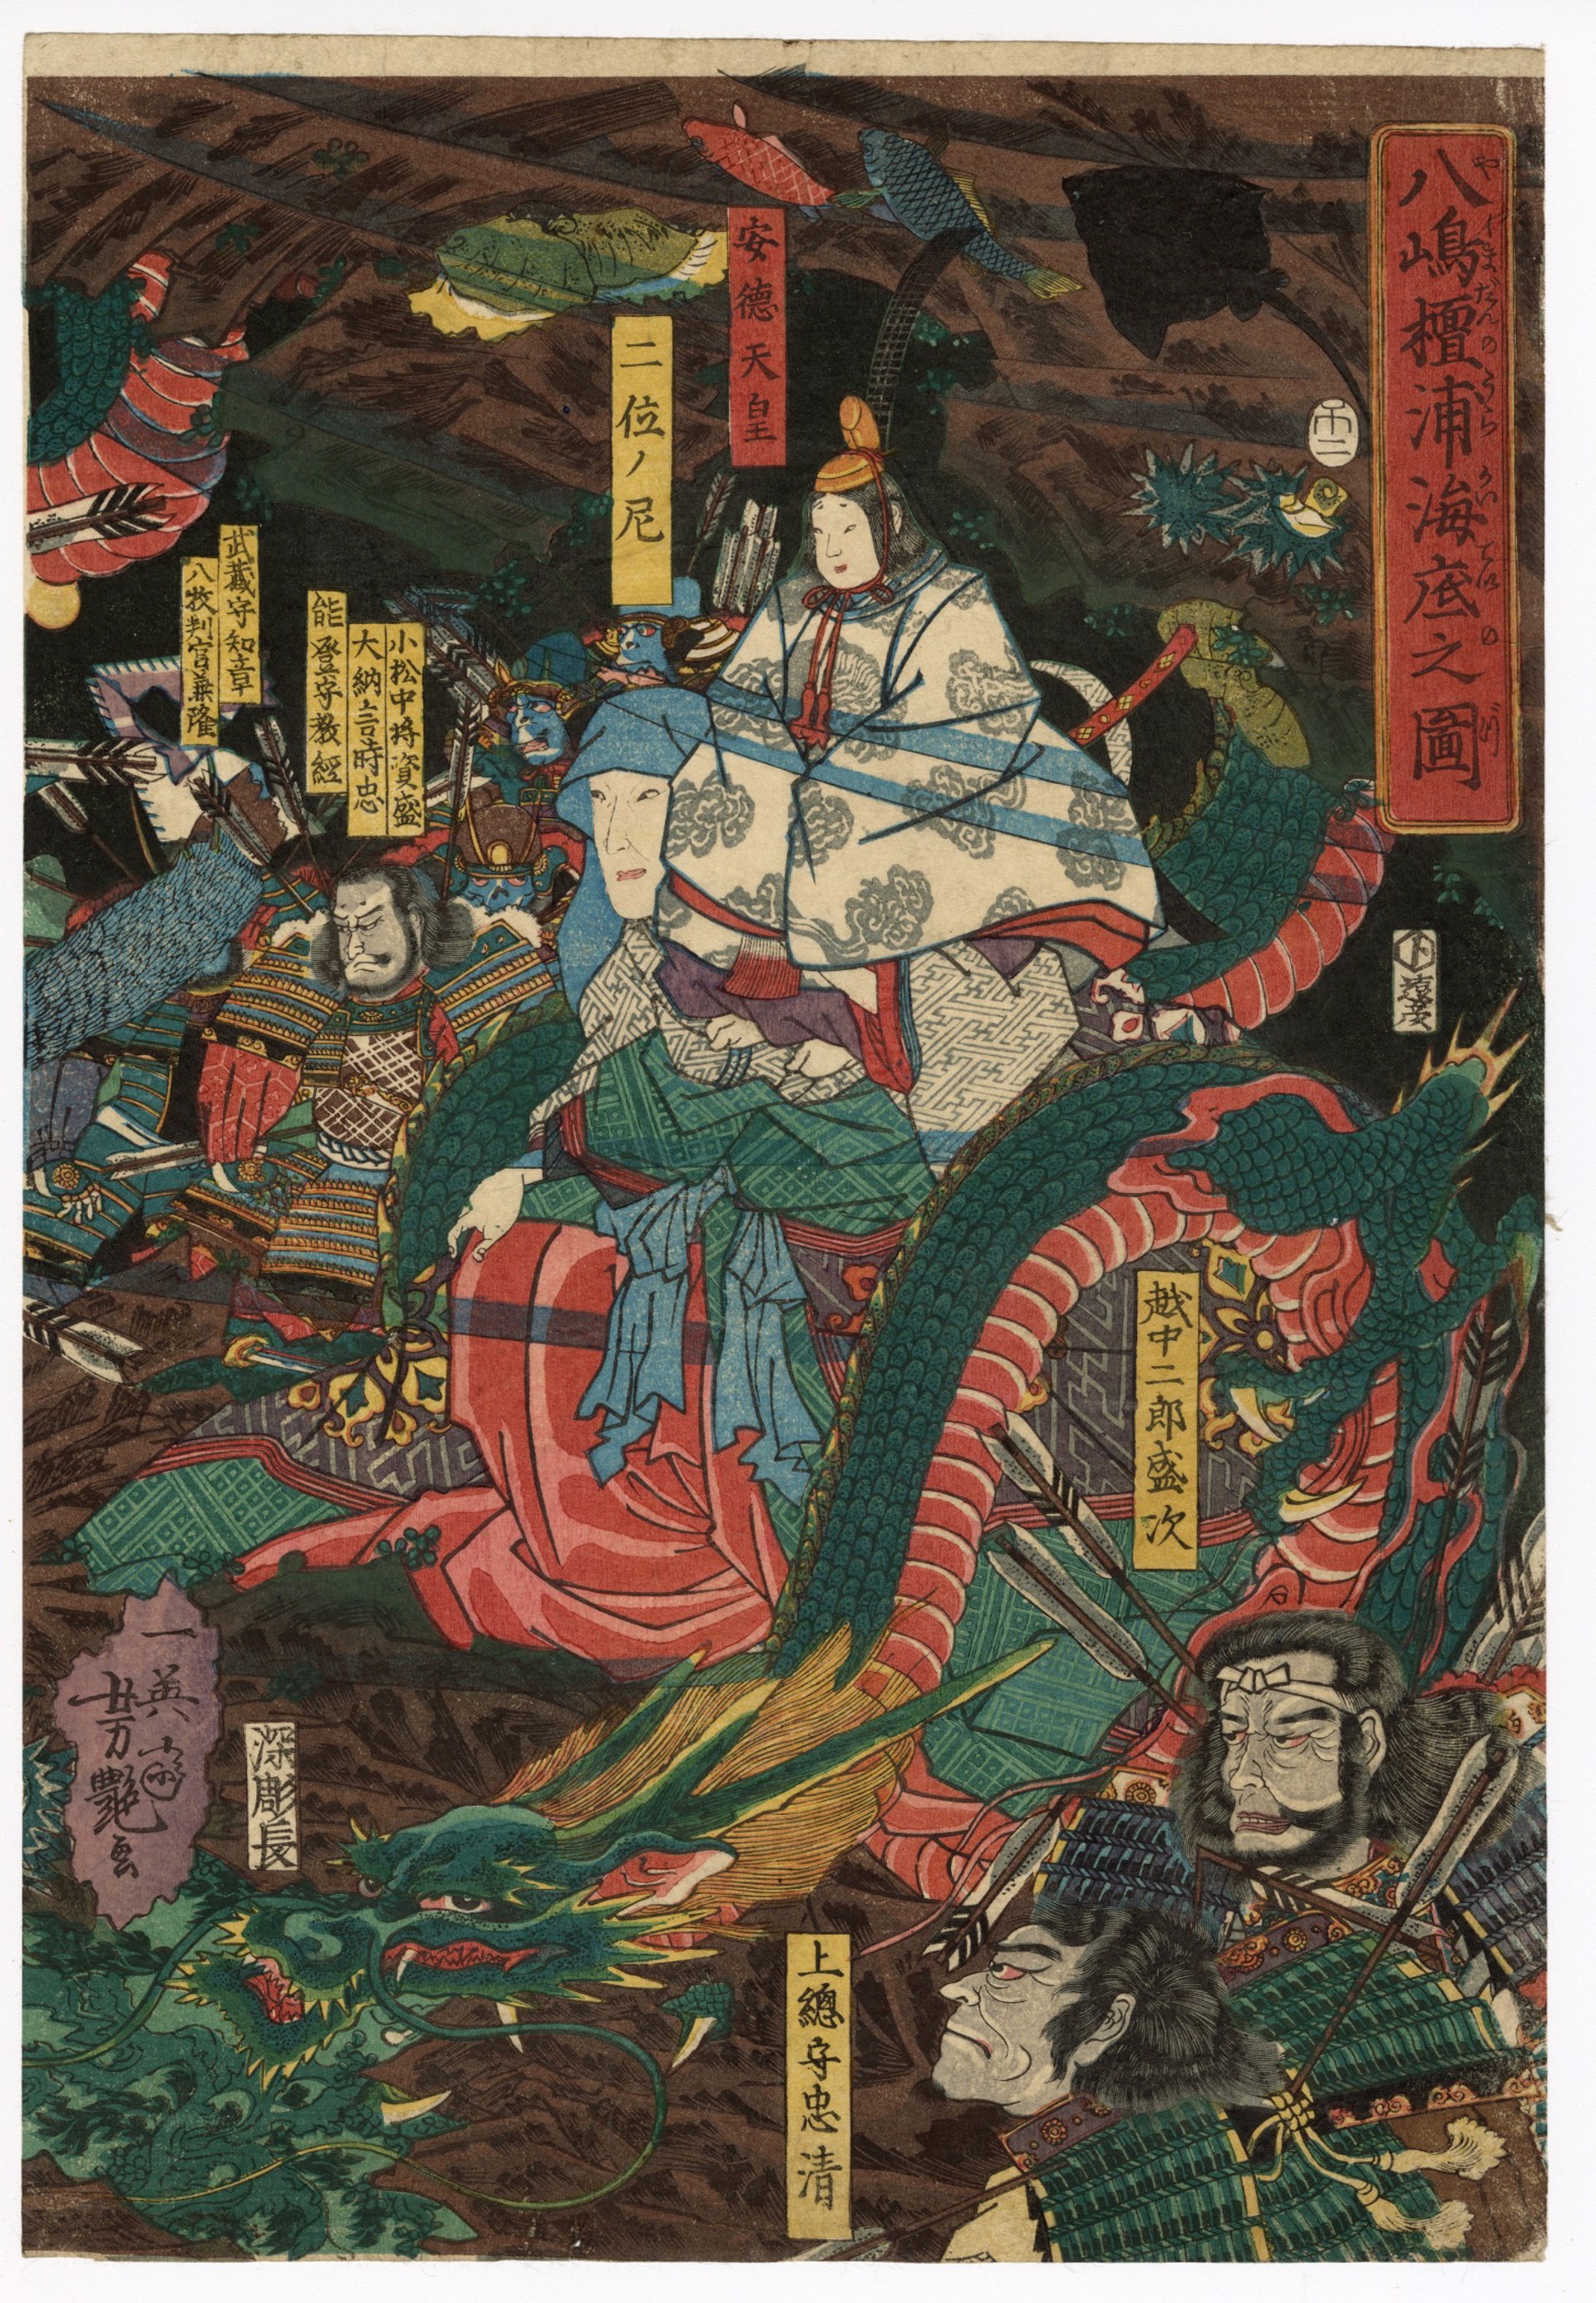 The Heike Clan Sinking into the Sea and Perishing at the battle of Dan no Ura by Yoshitsuya